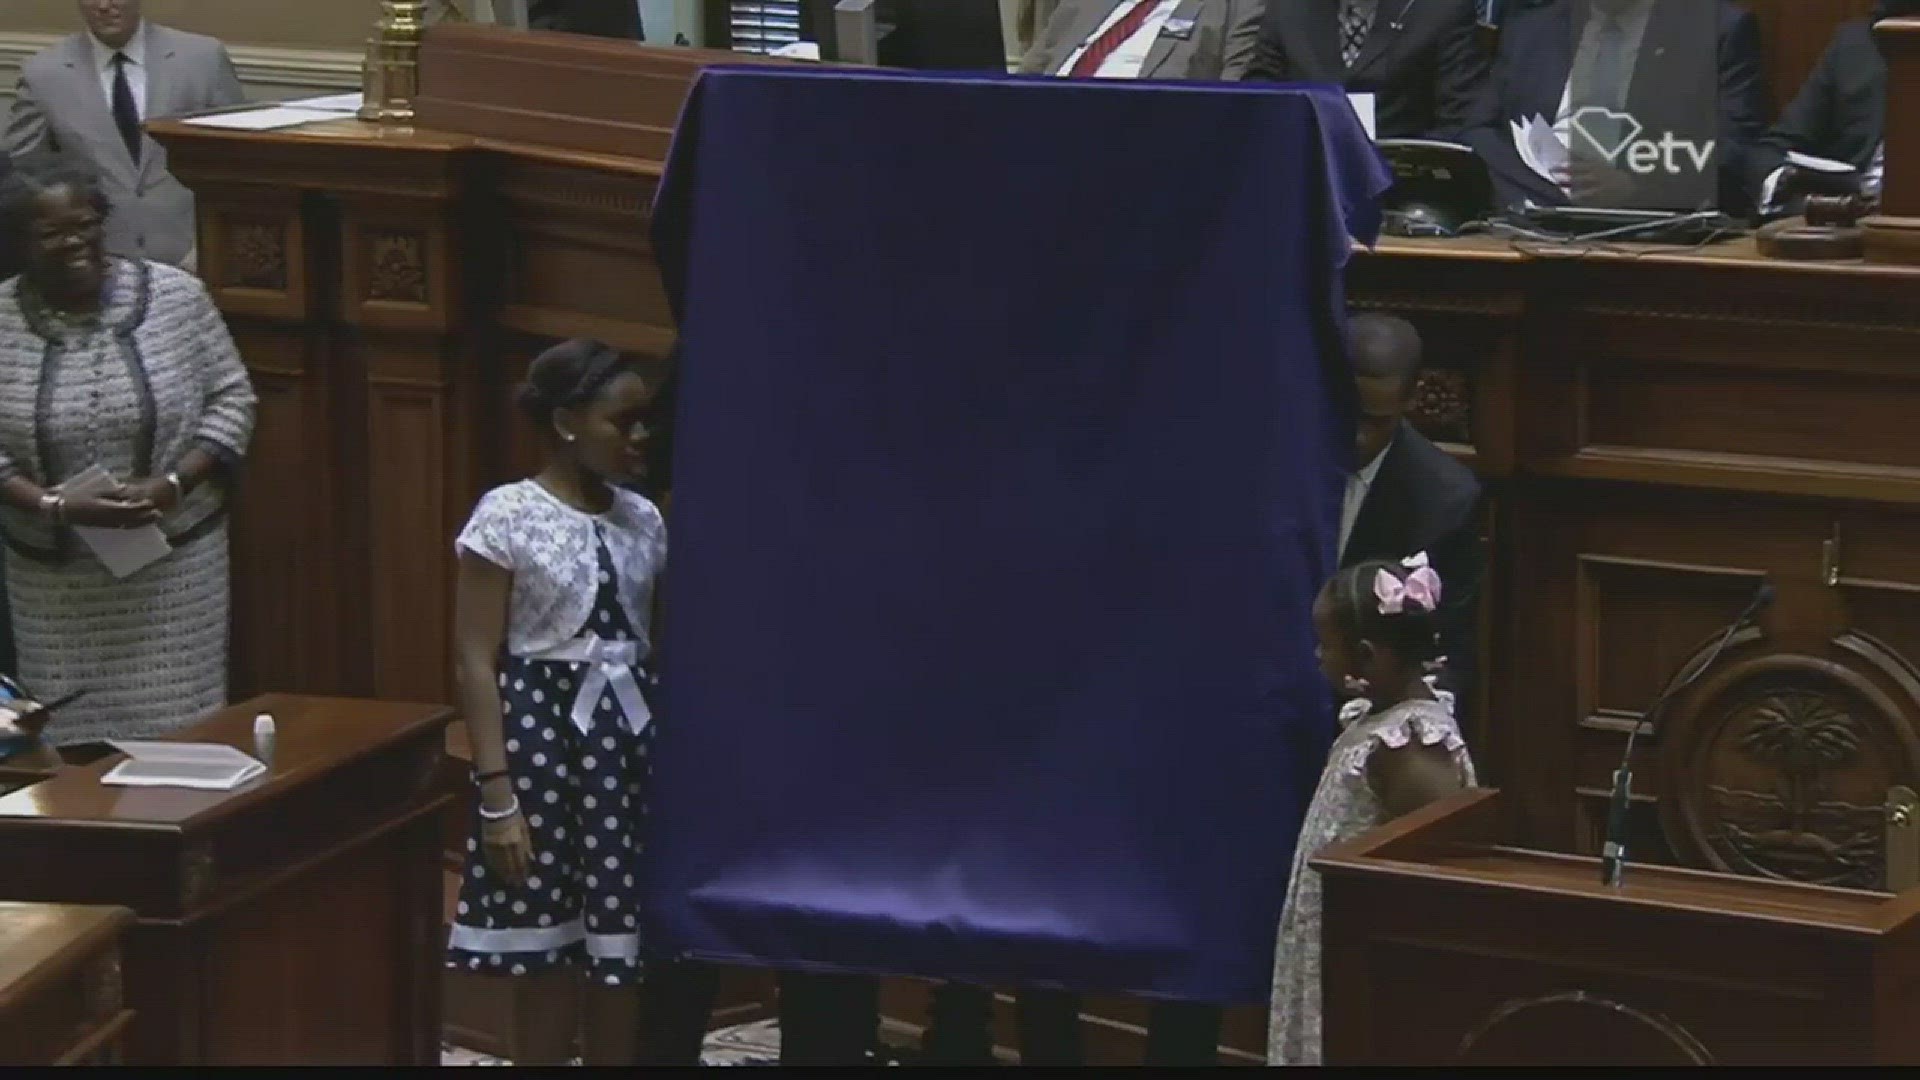 Sen. Clementa Pinckney's daughters unveiled his official portrait at the South Carolina Senate.